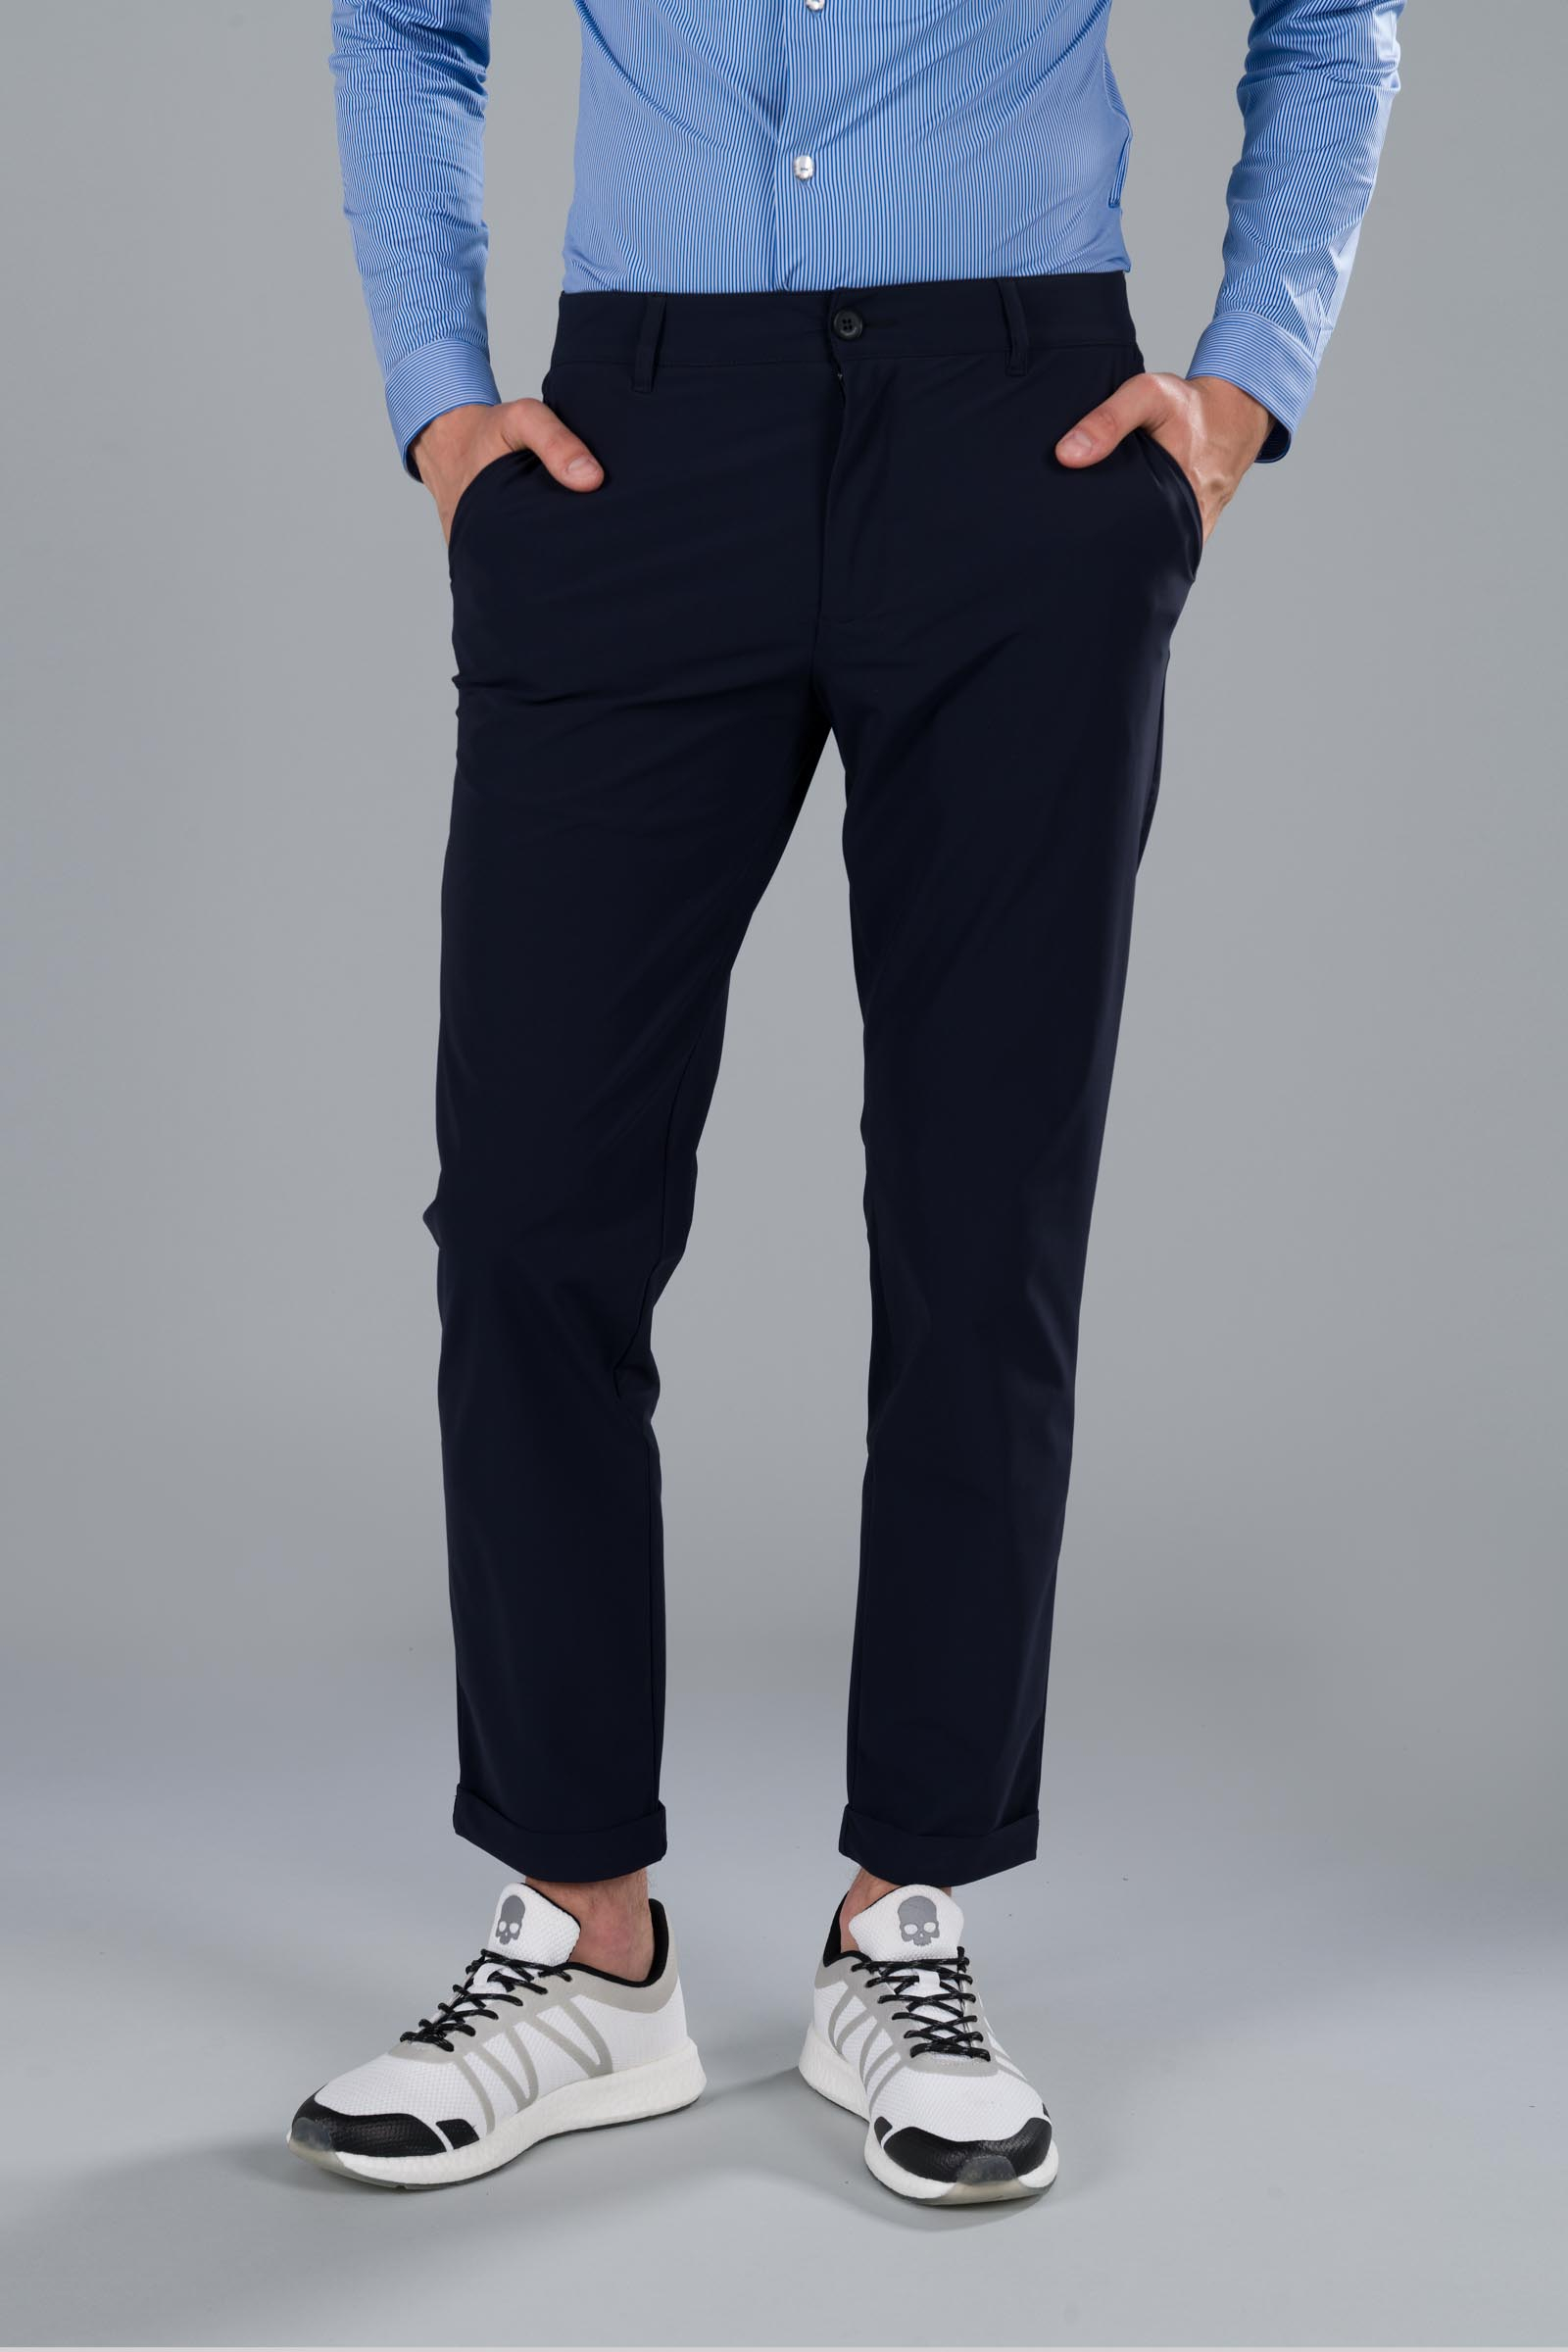 CLASSIC PANTS - BLUE NAVY - Abbigliamento sportivo | Hydrogen